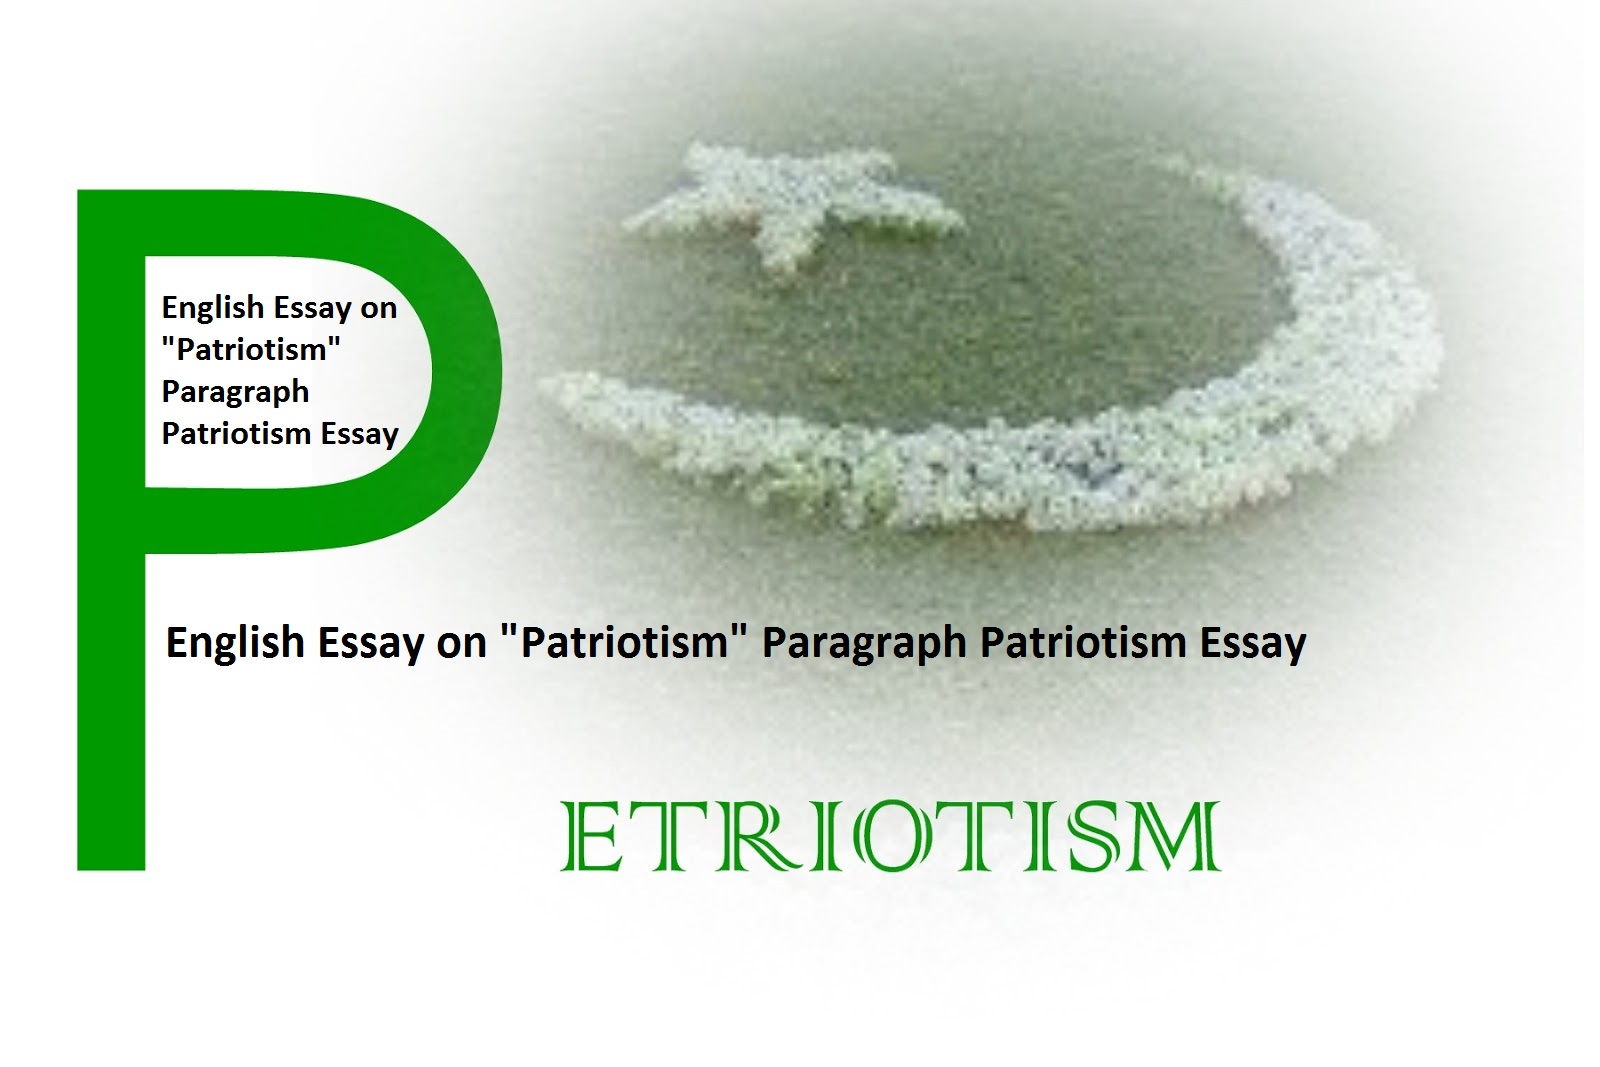 Patriotism essay for students